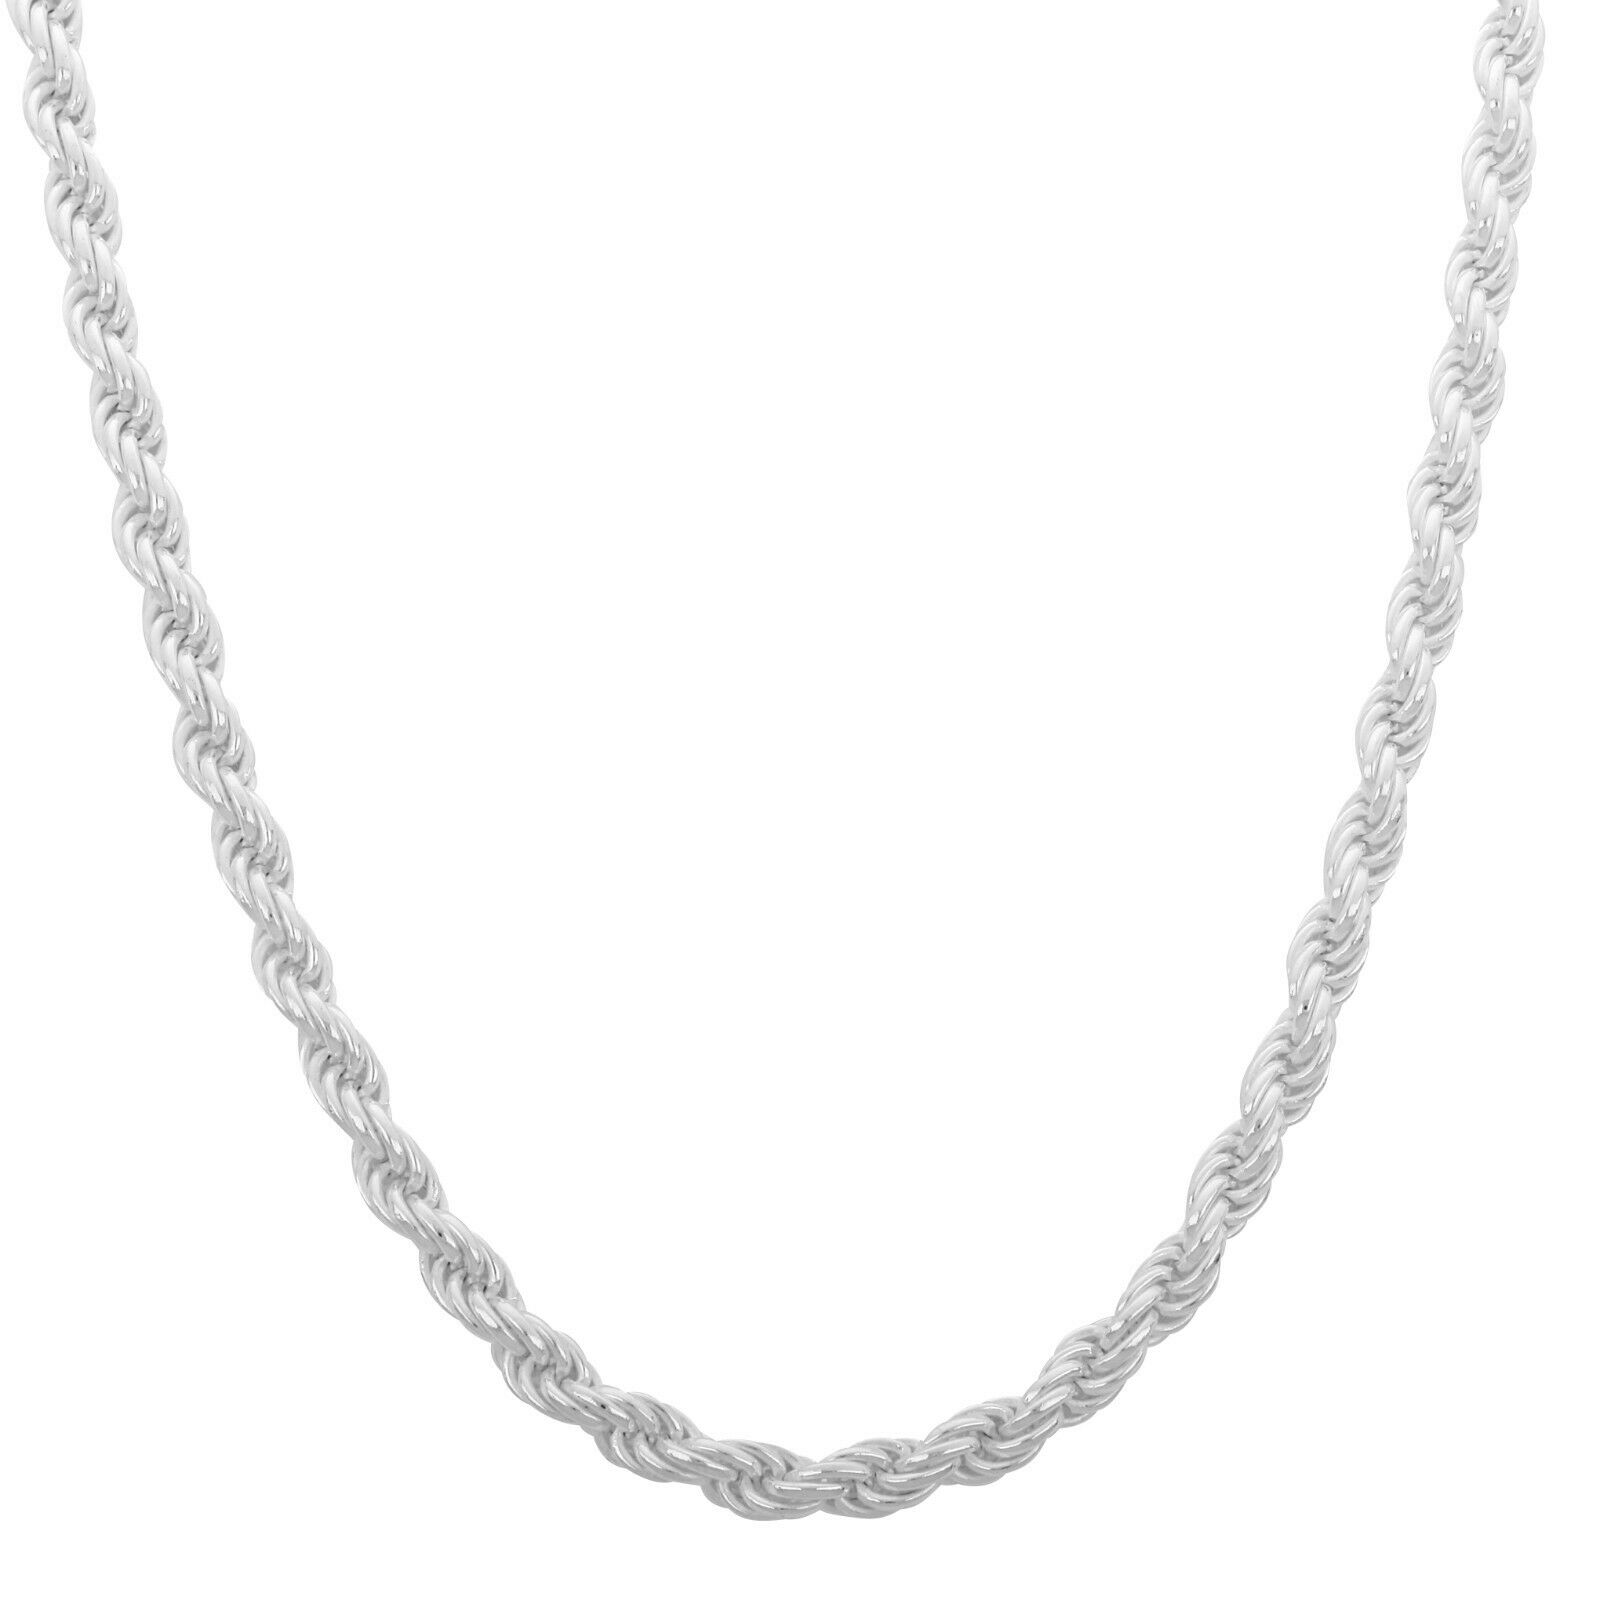 Kordelkette Silber 925 Sterlingsilber 60 cm x 1,8mm–2,6 mm Halskette Neu 